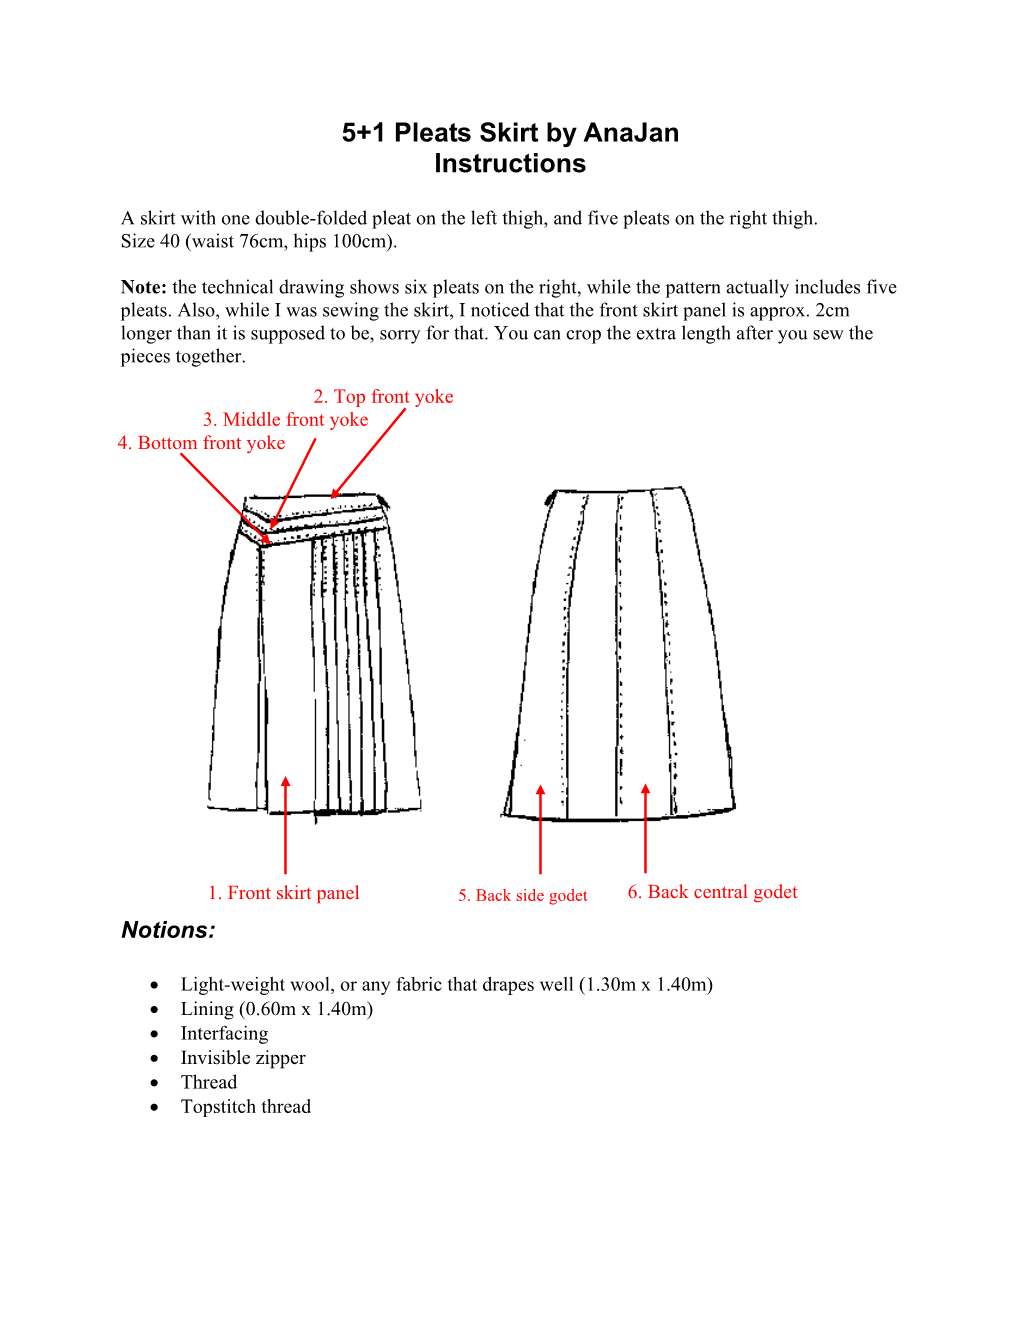 5+1 Pleats Skirt by Anajan Instructions